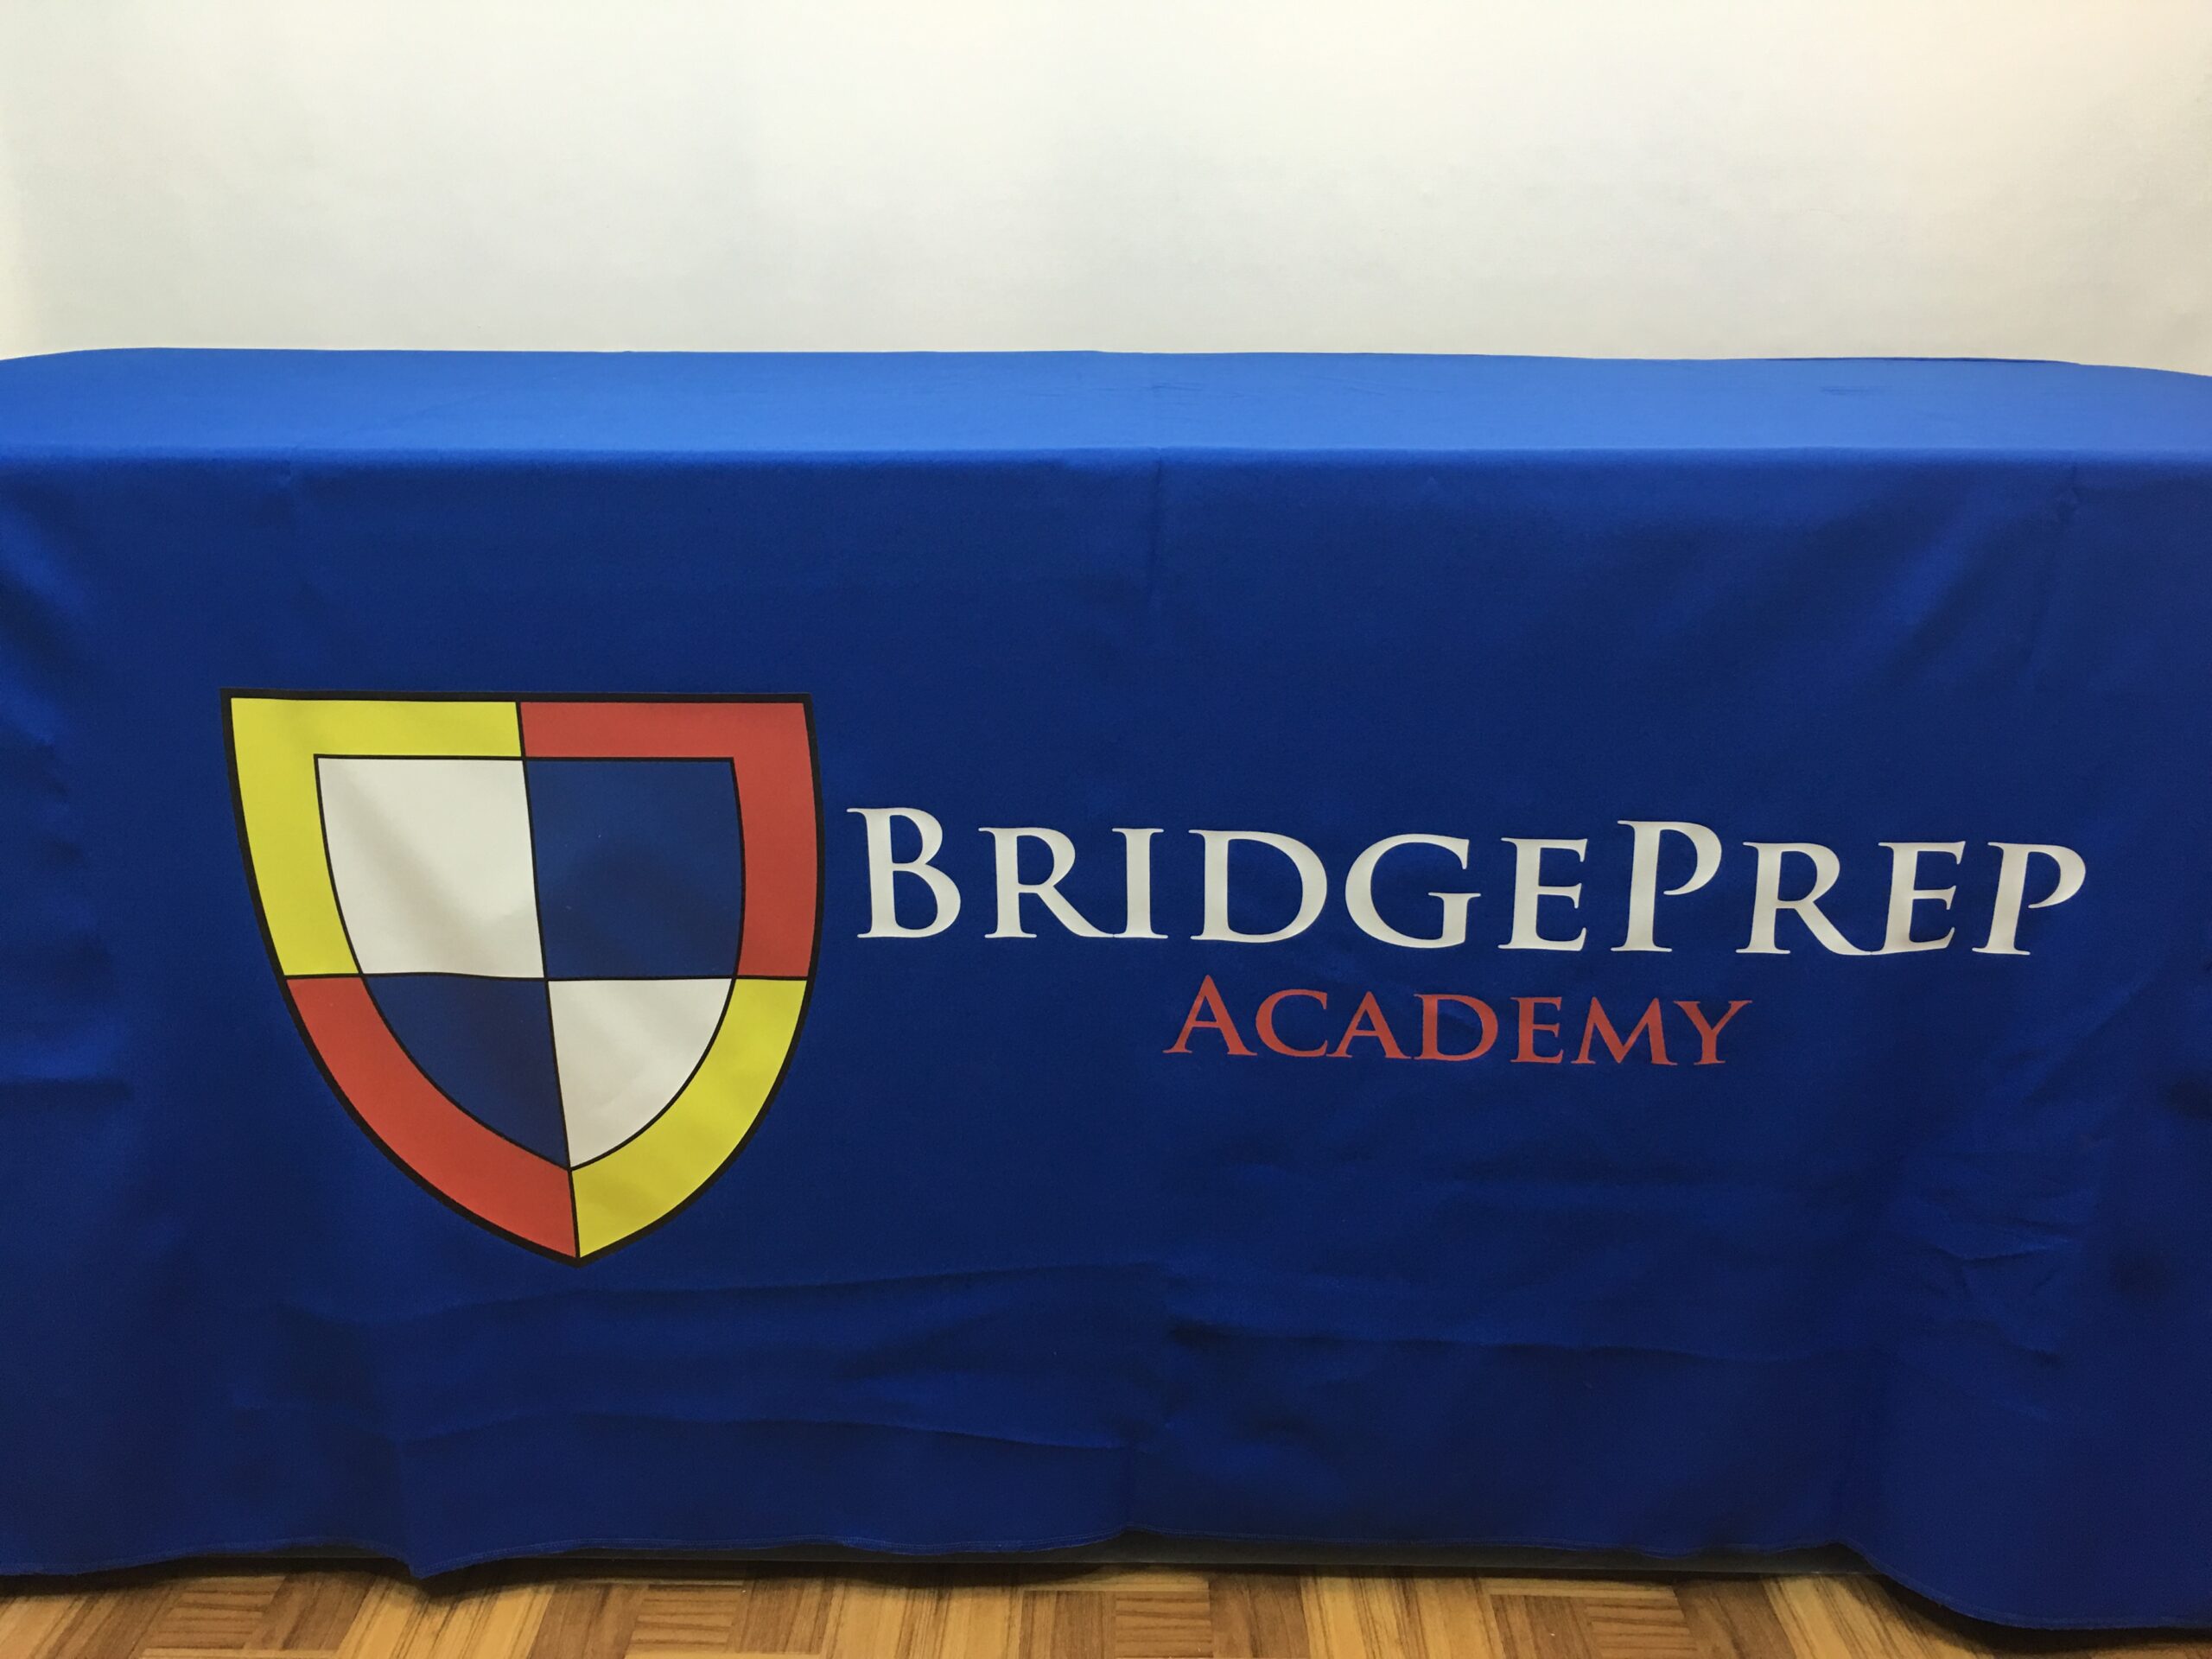 School bridge prep academy table cover